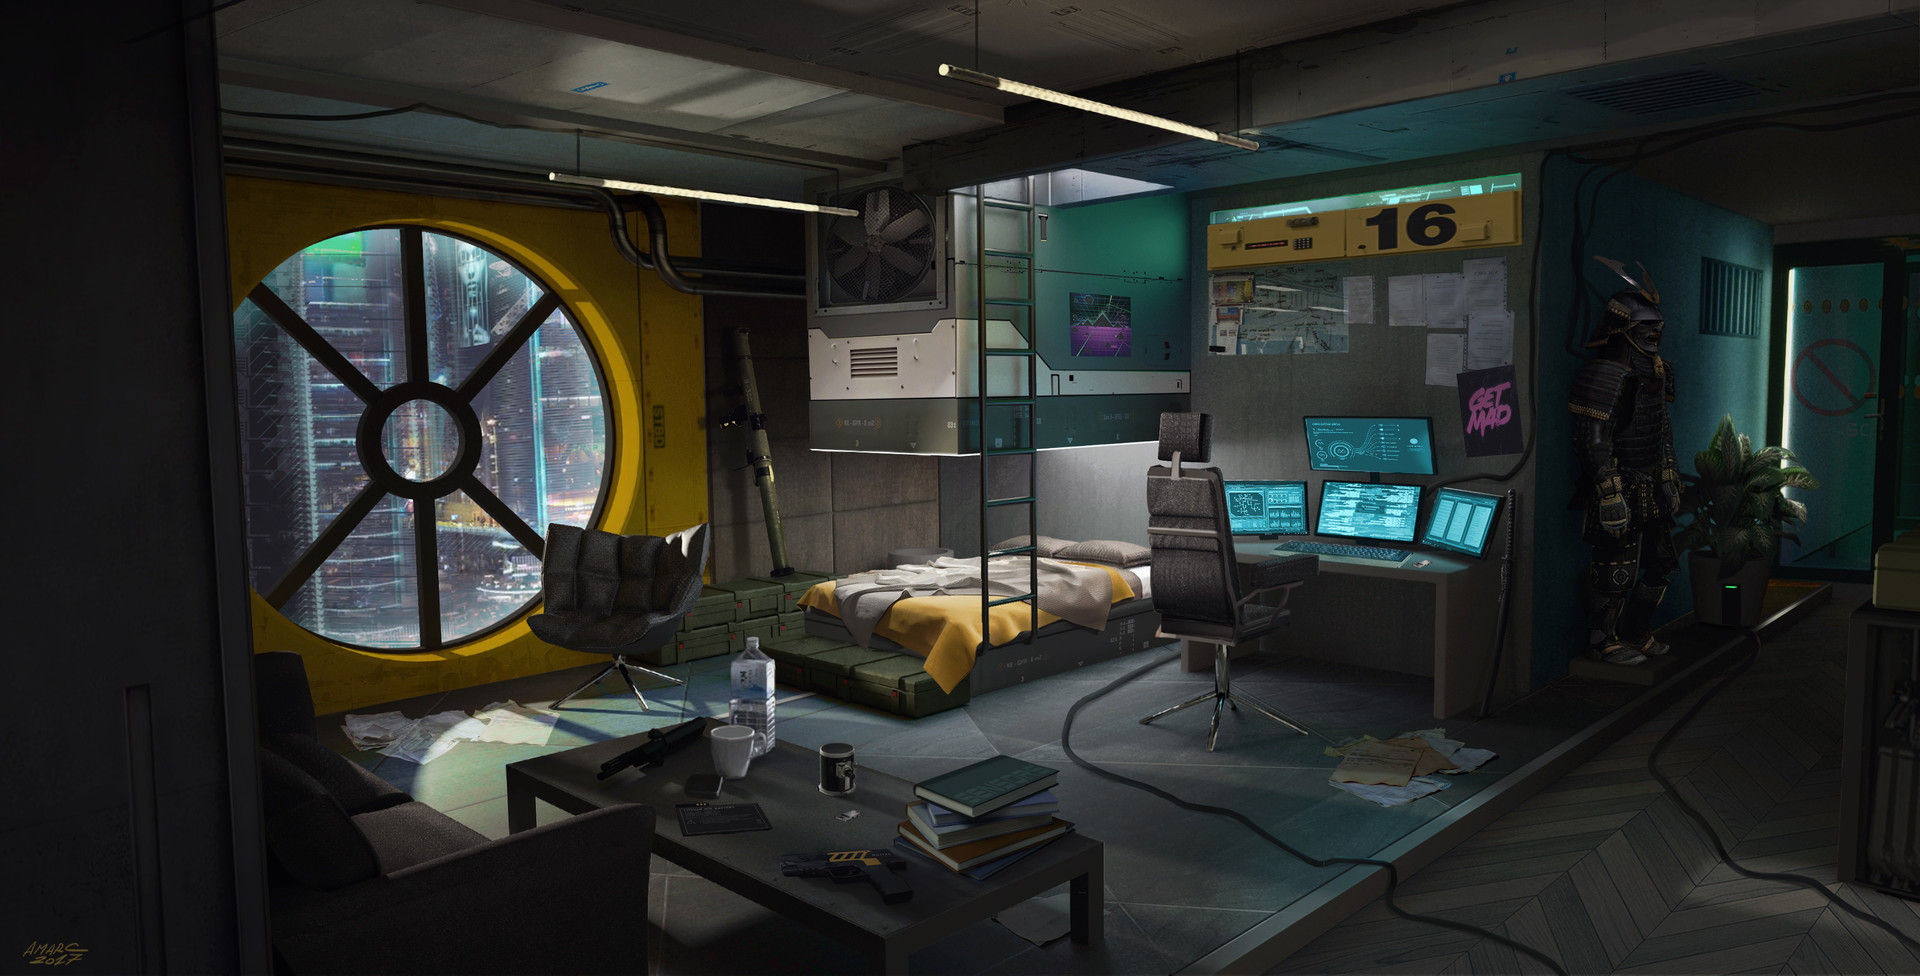 ArtStation - Cyberpunk Room Interior